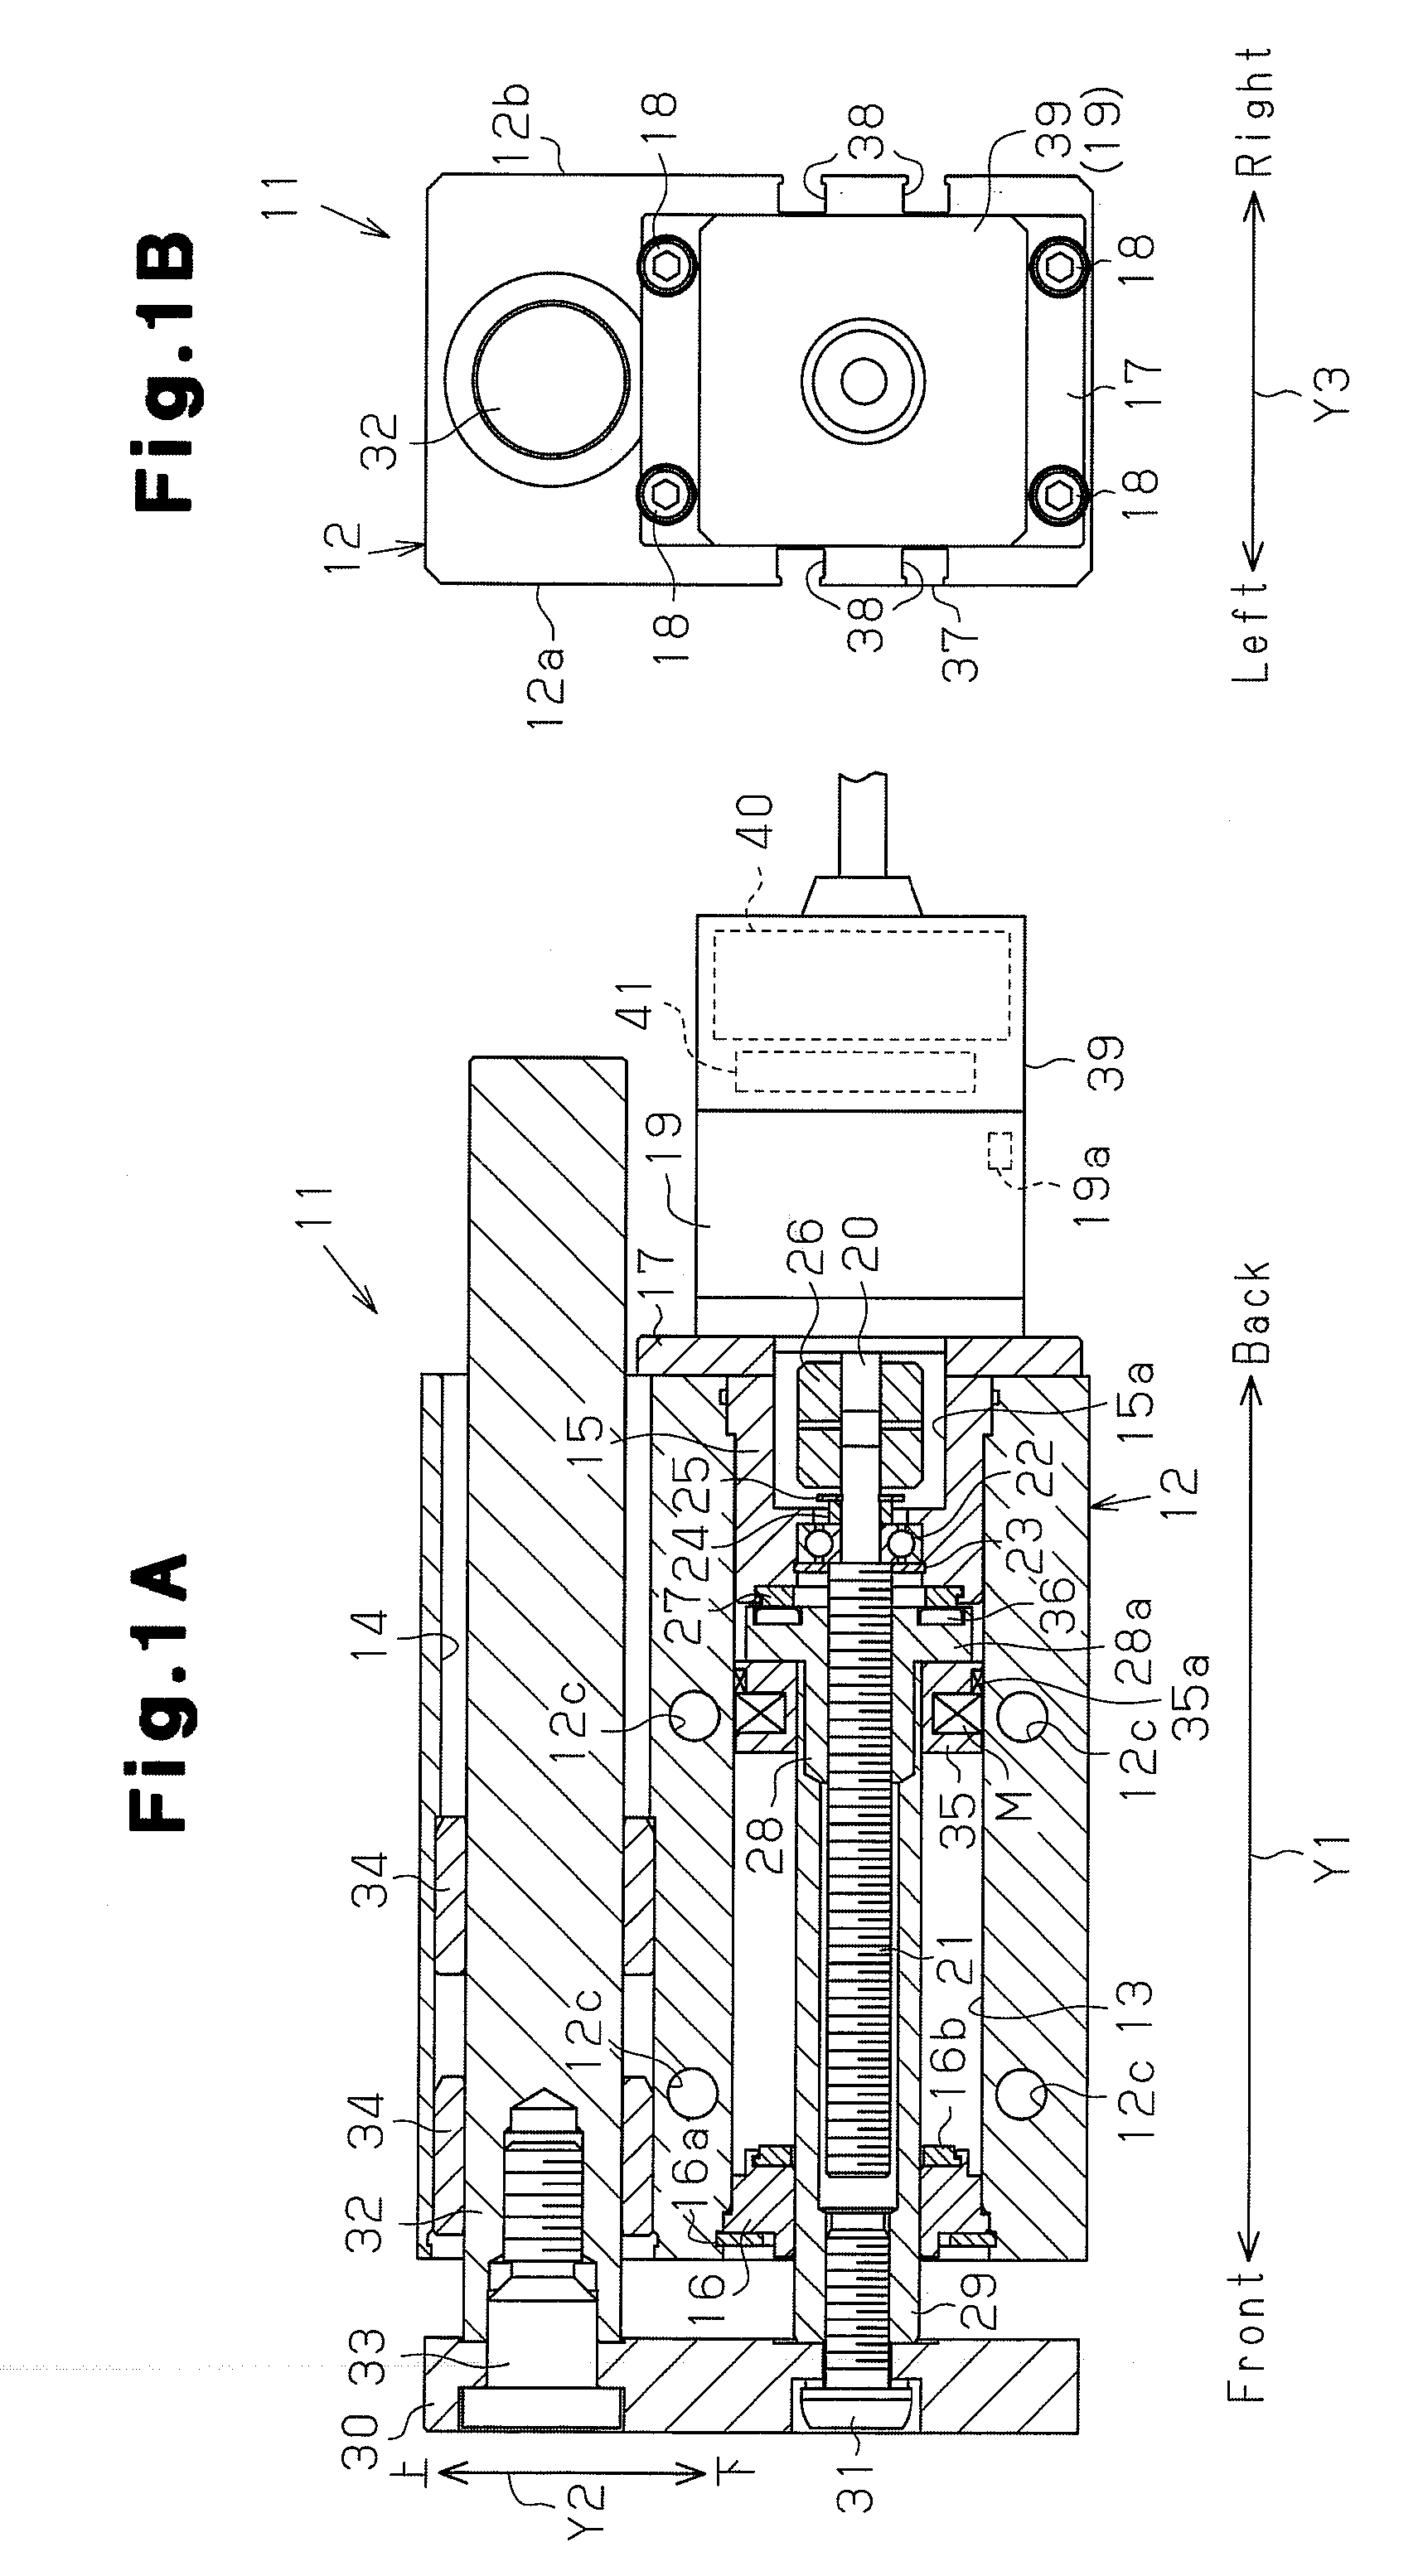 Electrical actuator